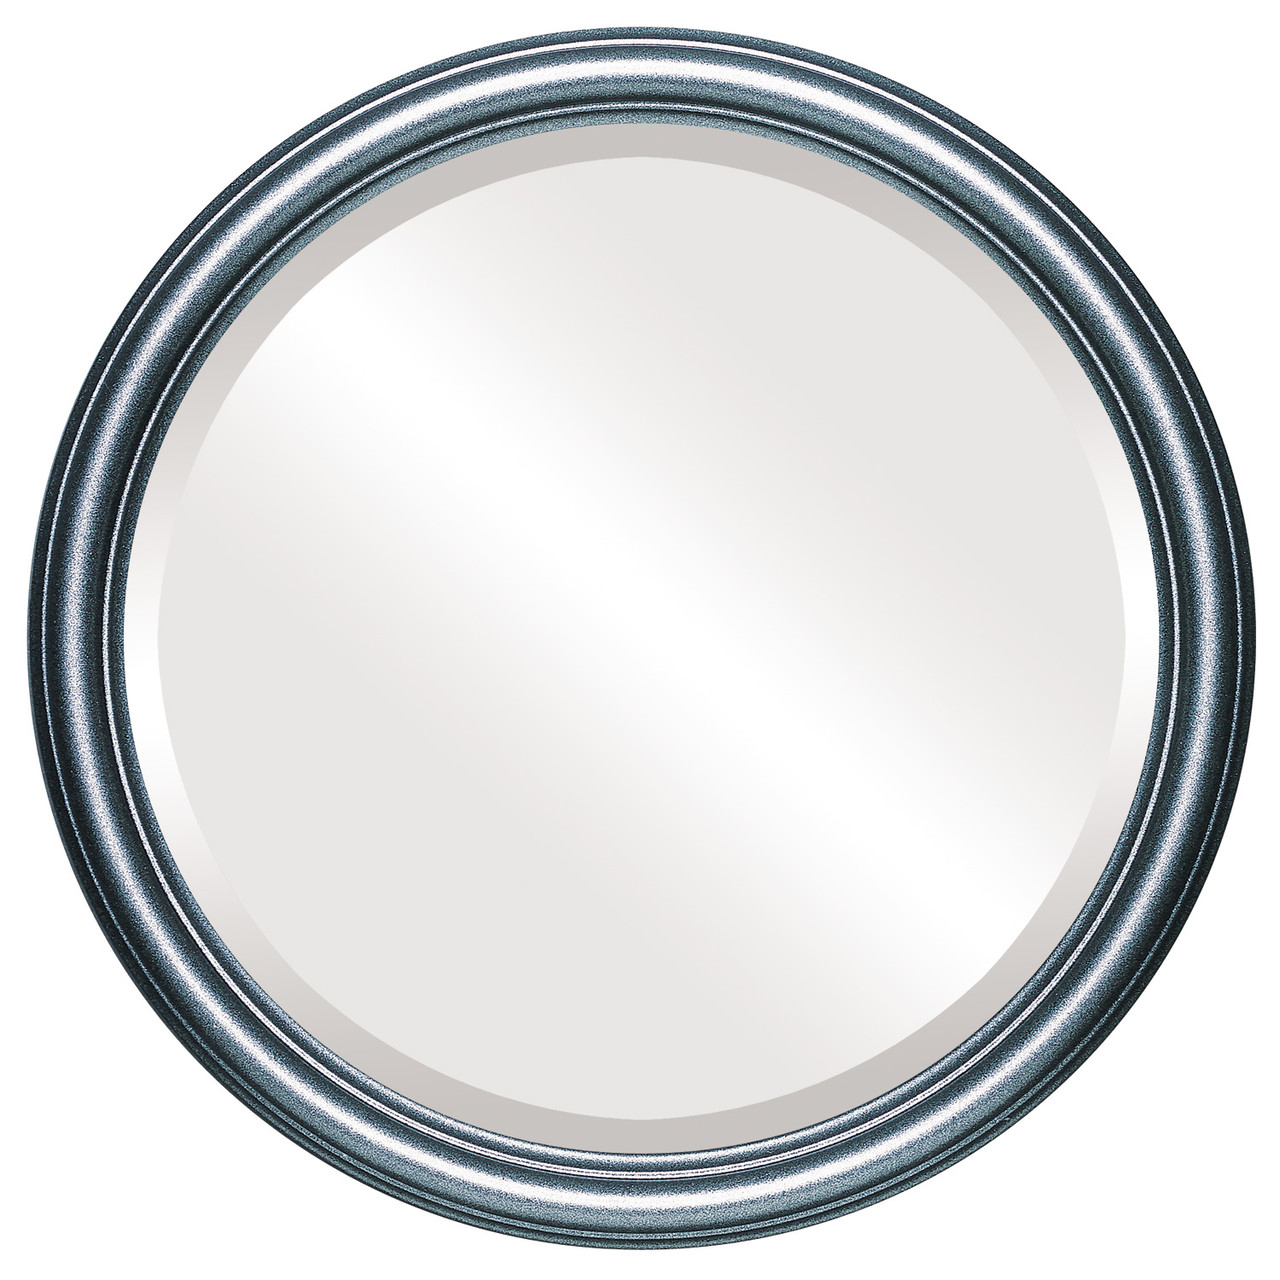 Round Framed Mirror #854 Tribeca Matte Black Finish - 1 - Wood - Victorian Frame Company